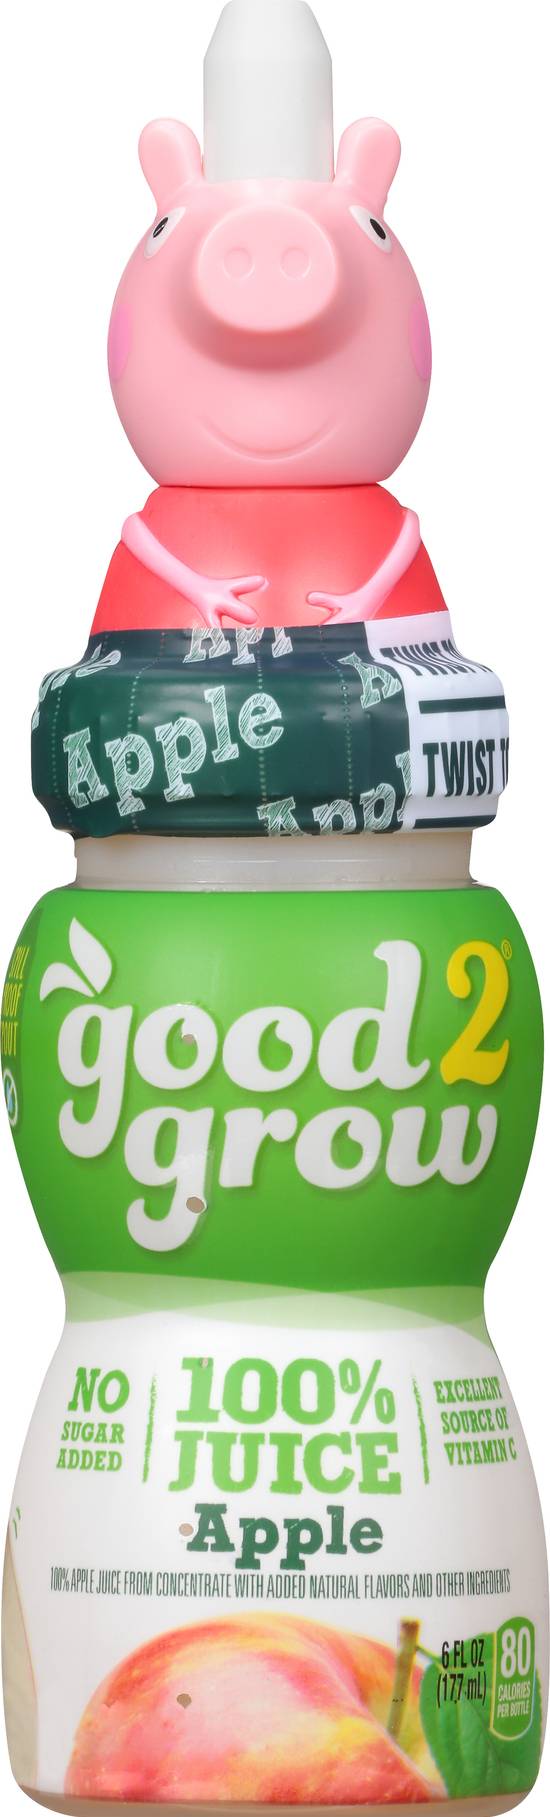 Good2grow 100% Juice (6 fl oz) (apple)